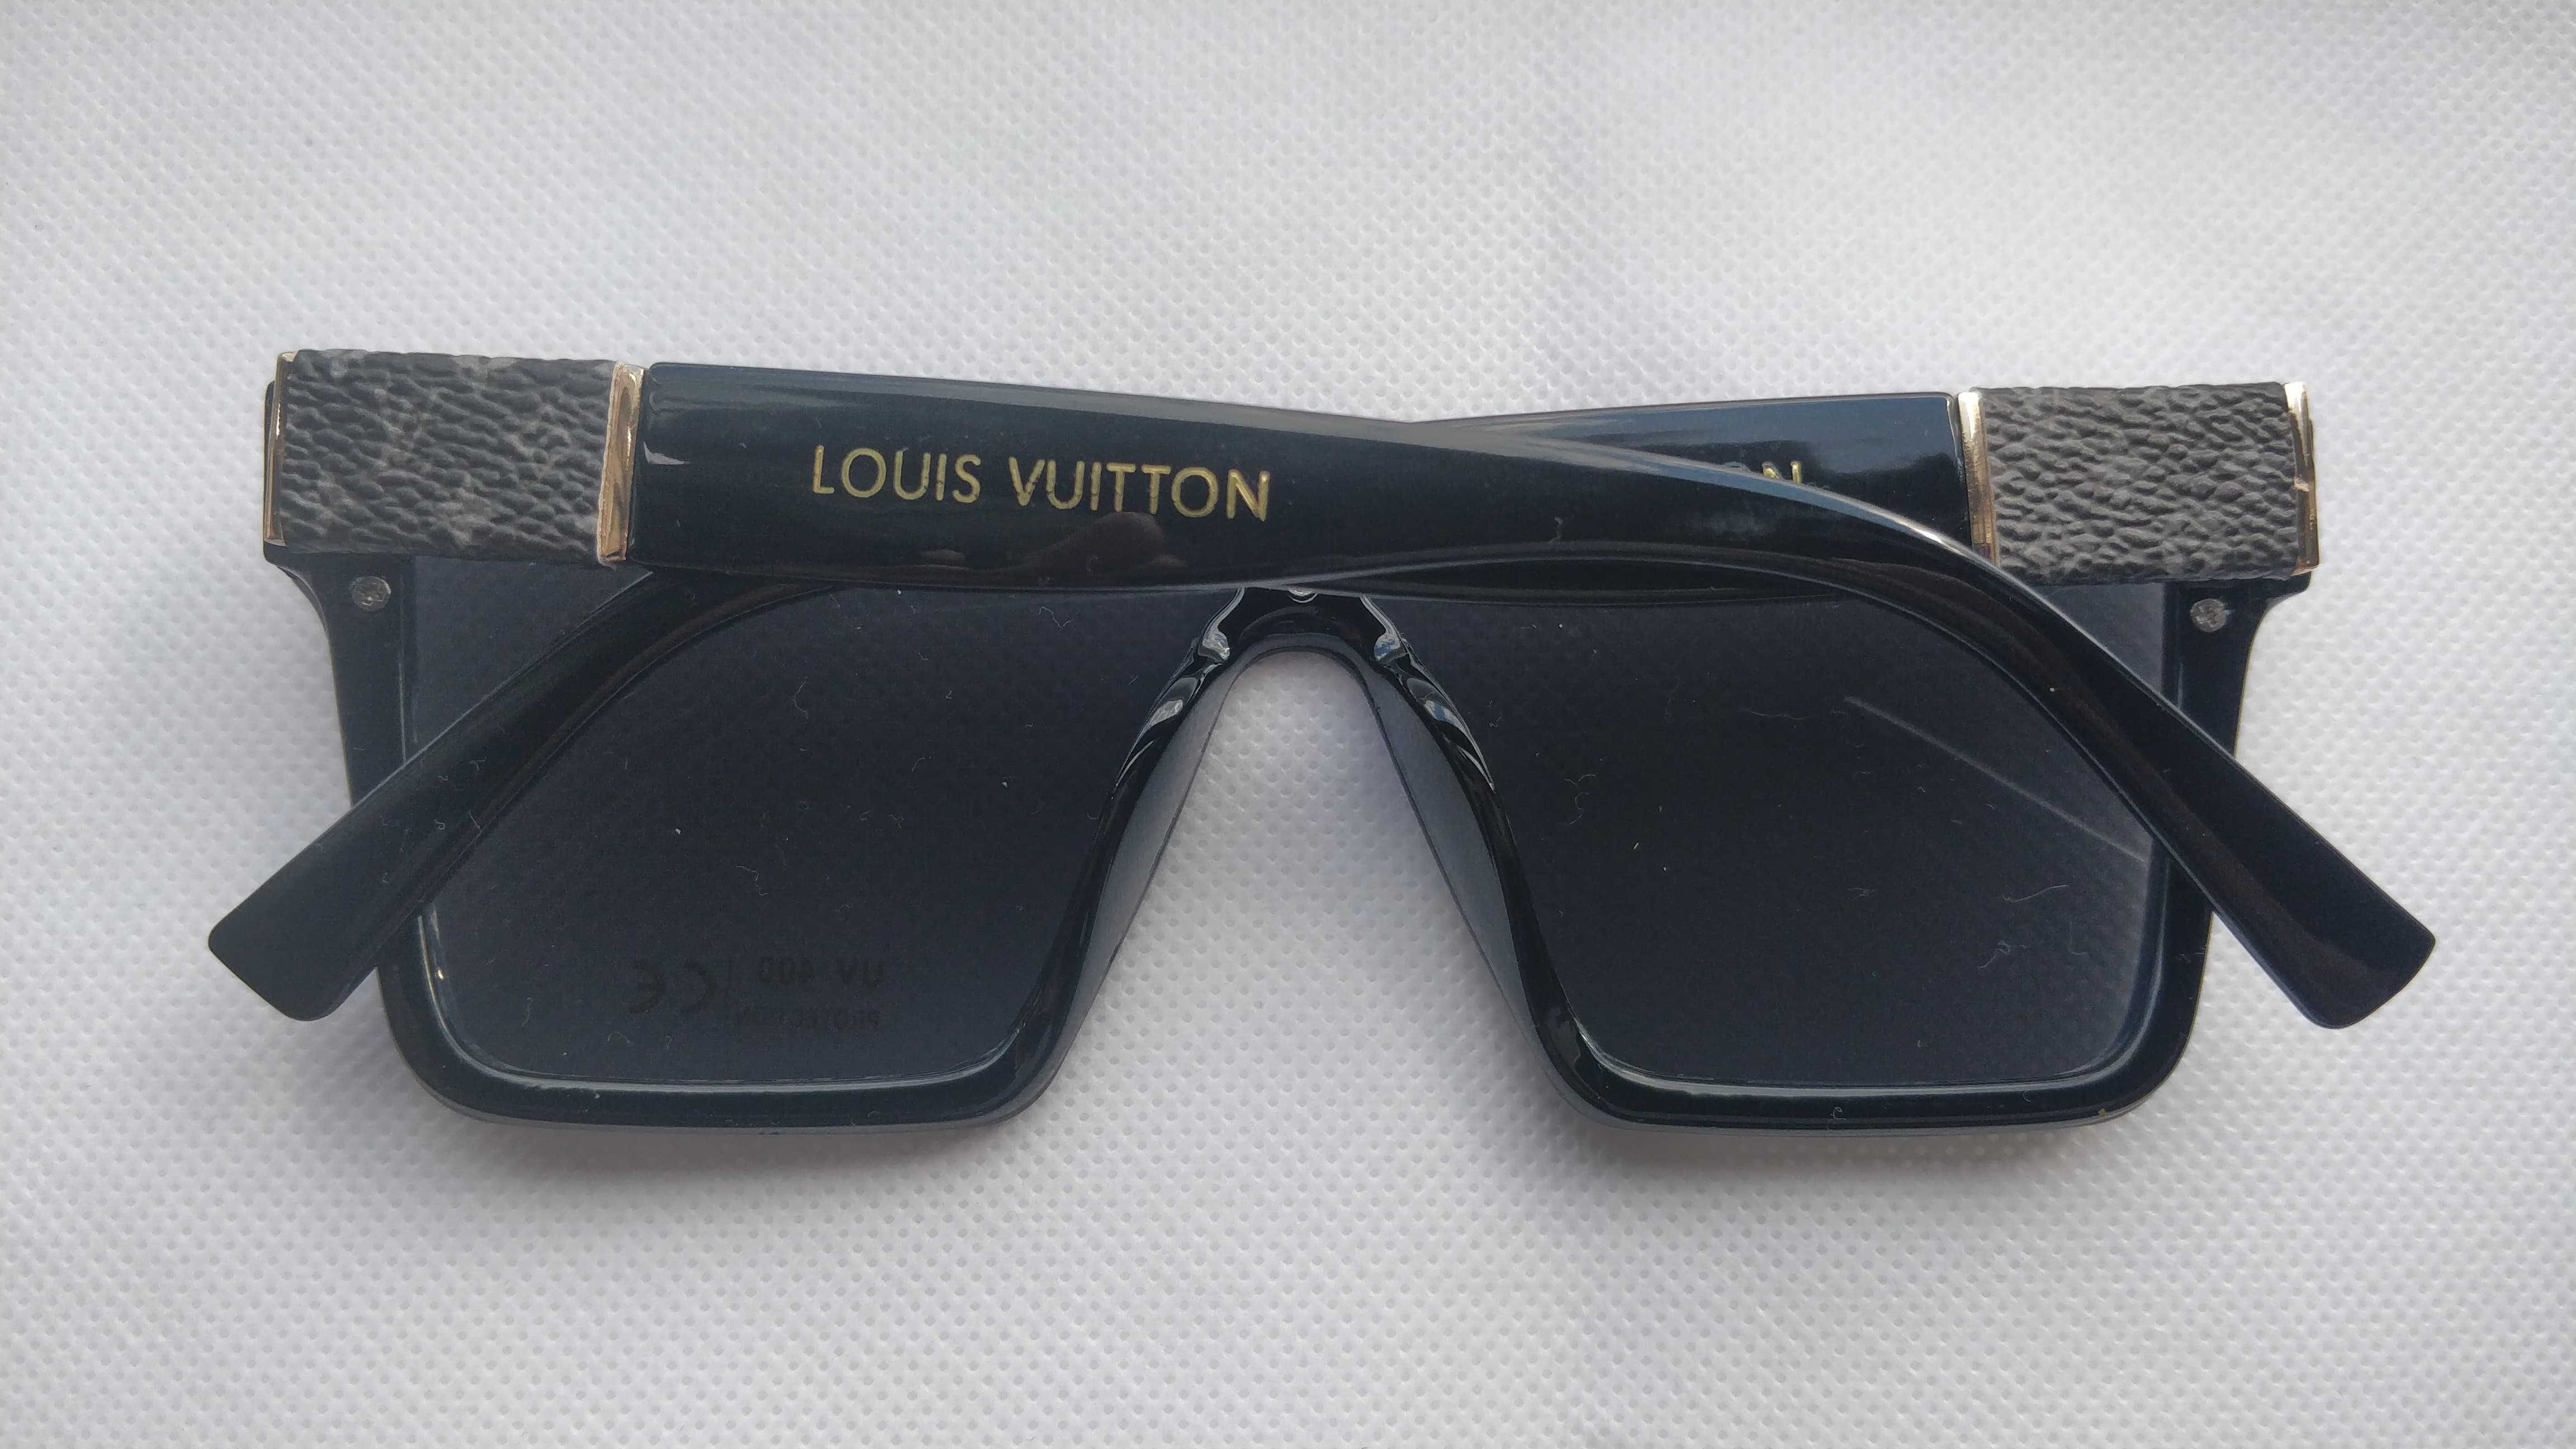 Ochelari de soare Louis Vuitton, lentile negre, model 1